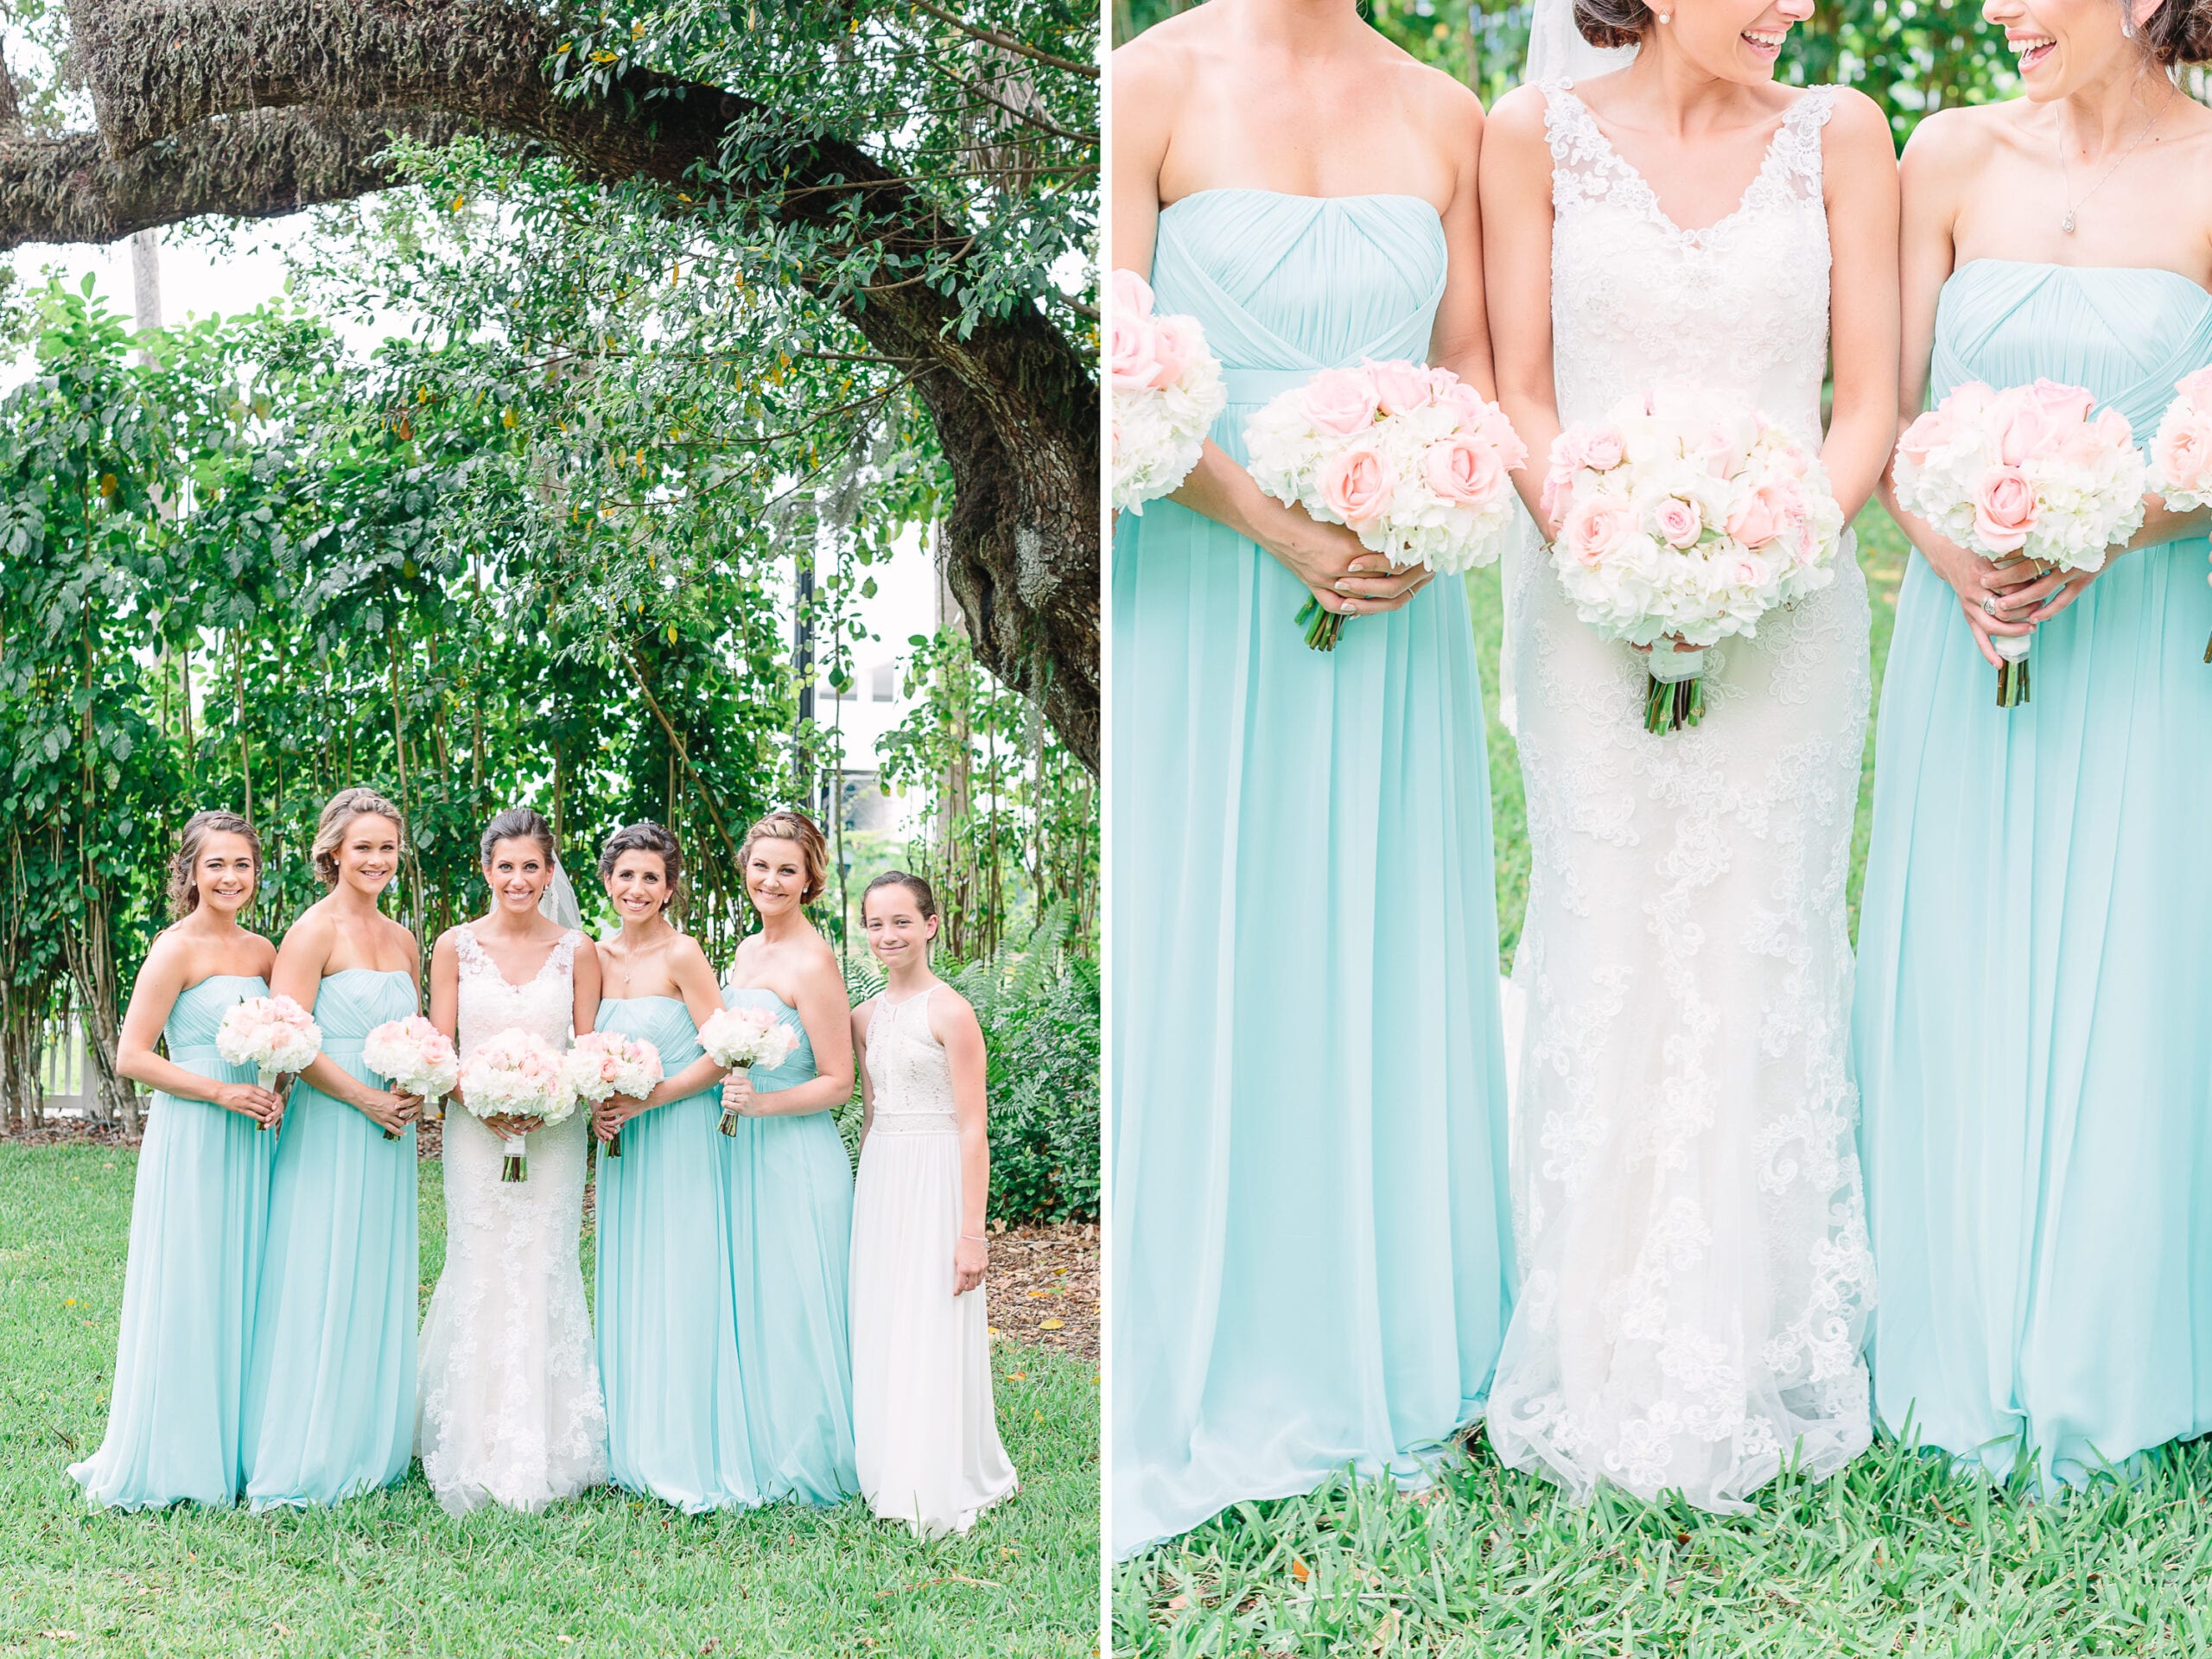 Dominic & Julia's Wedding | Lauren Myers Photography